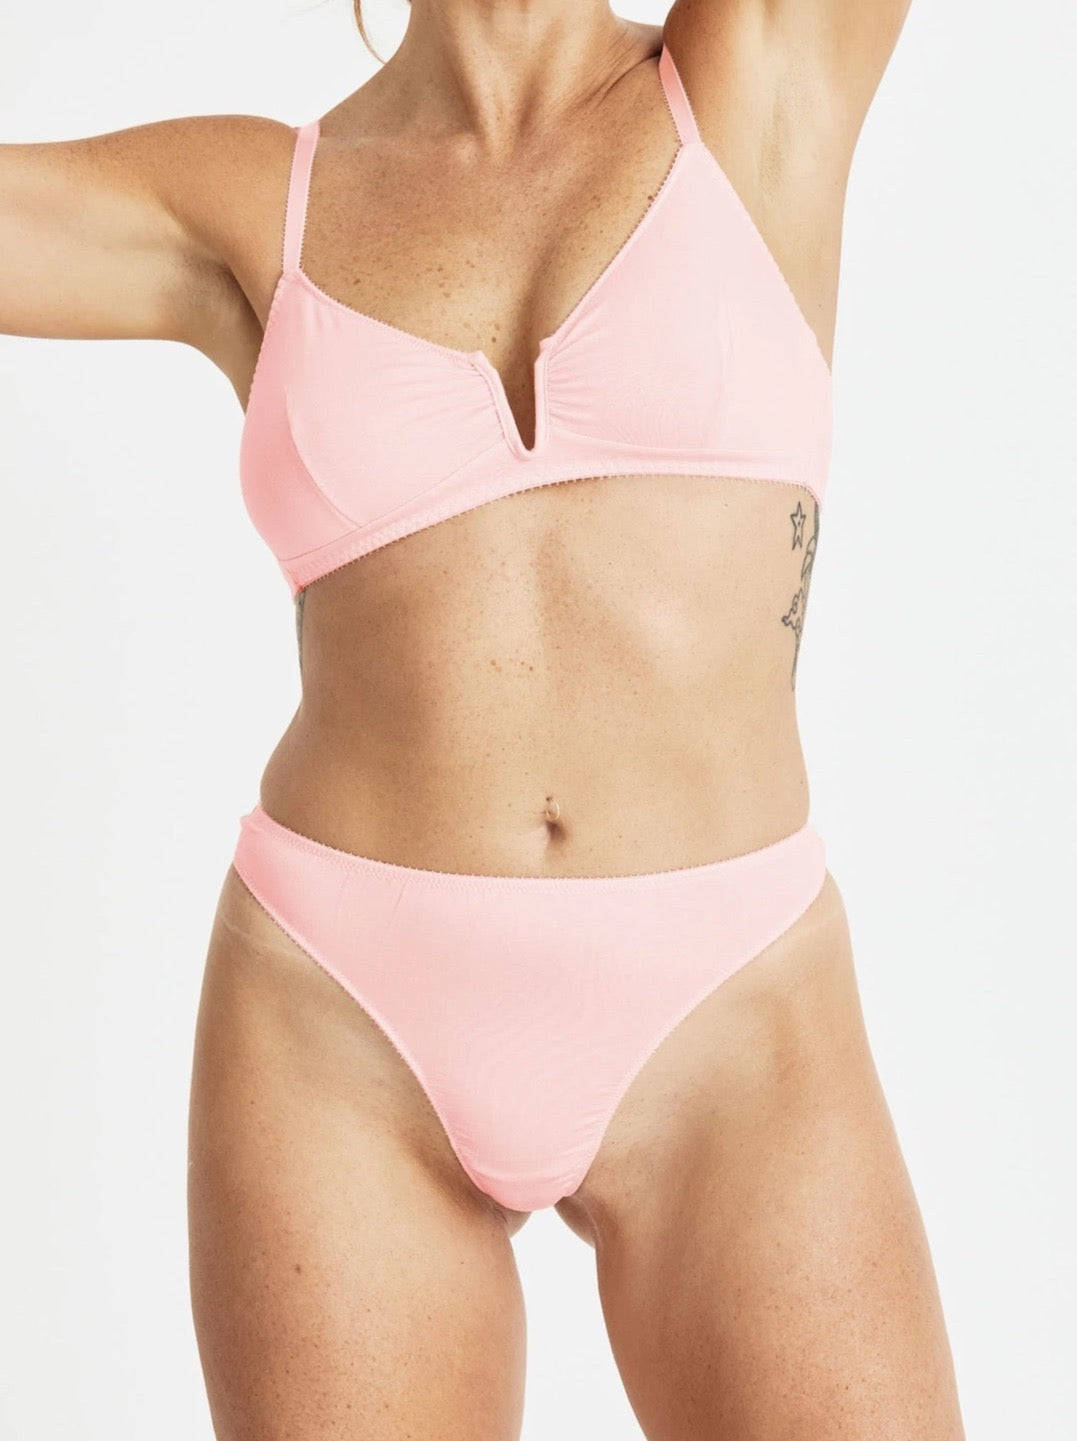 A woman in the Videris Angela Bra - Rosy bikini top and panties.